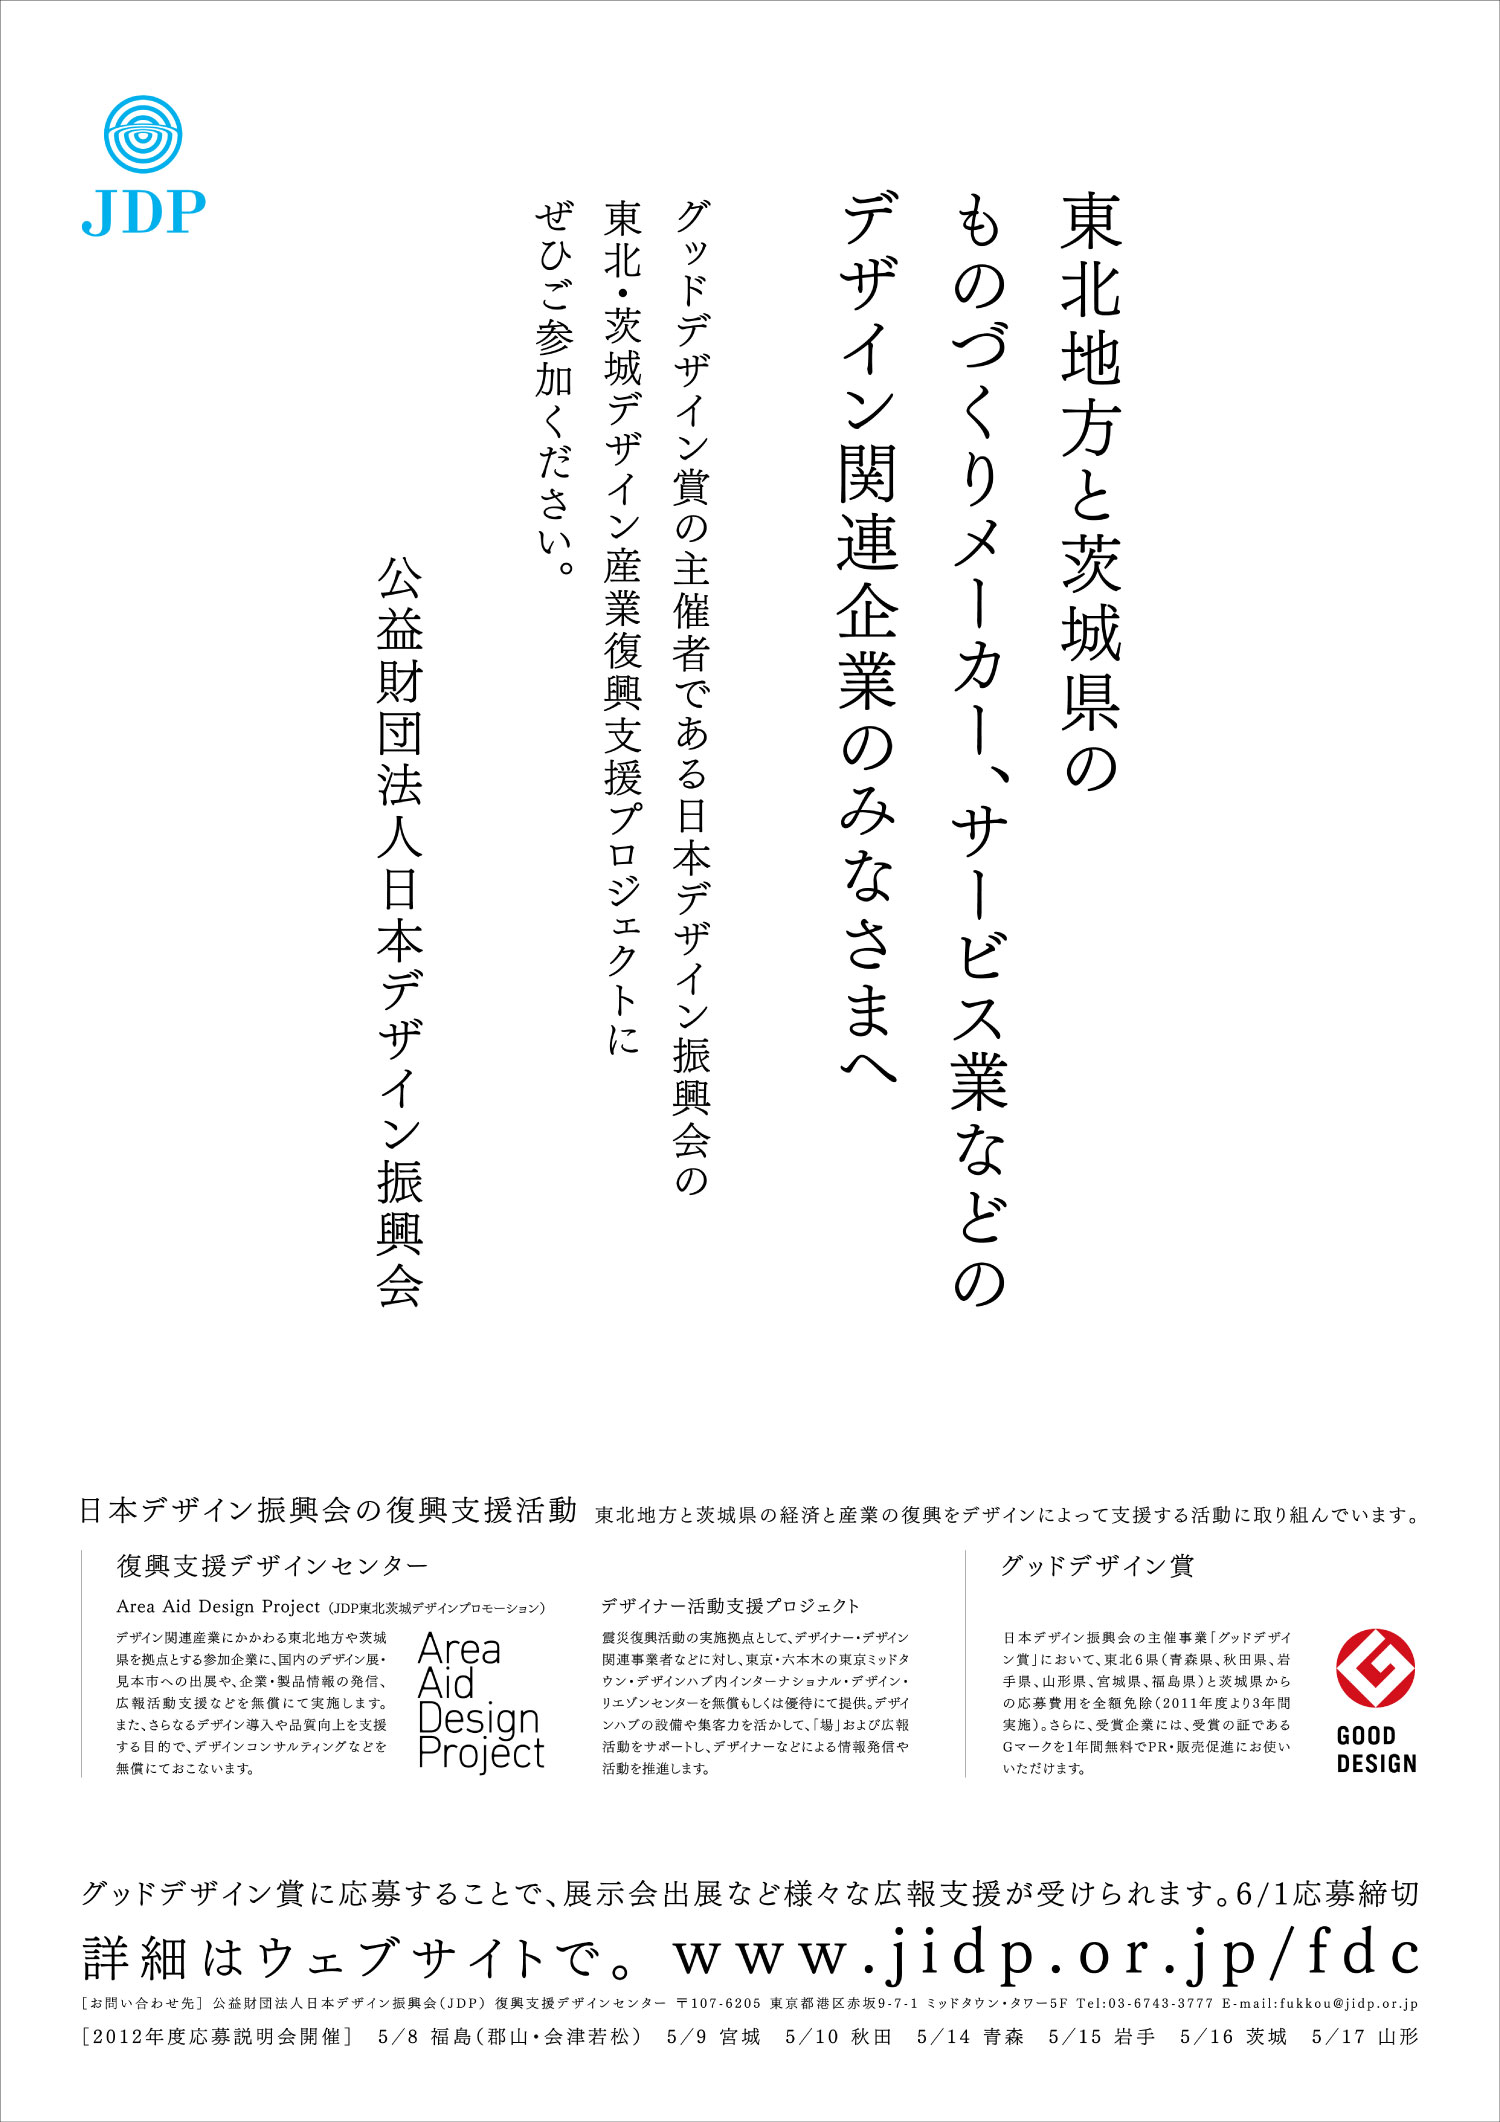 JDP Poster